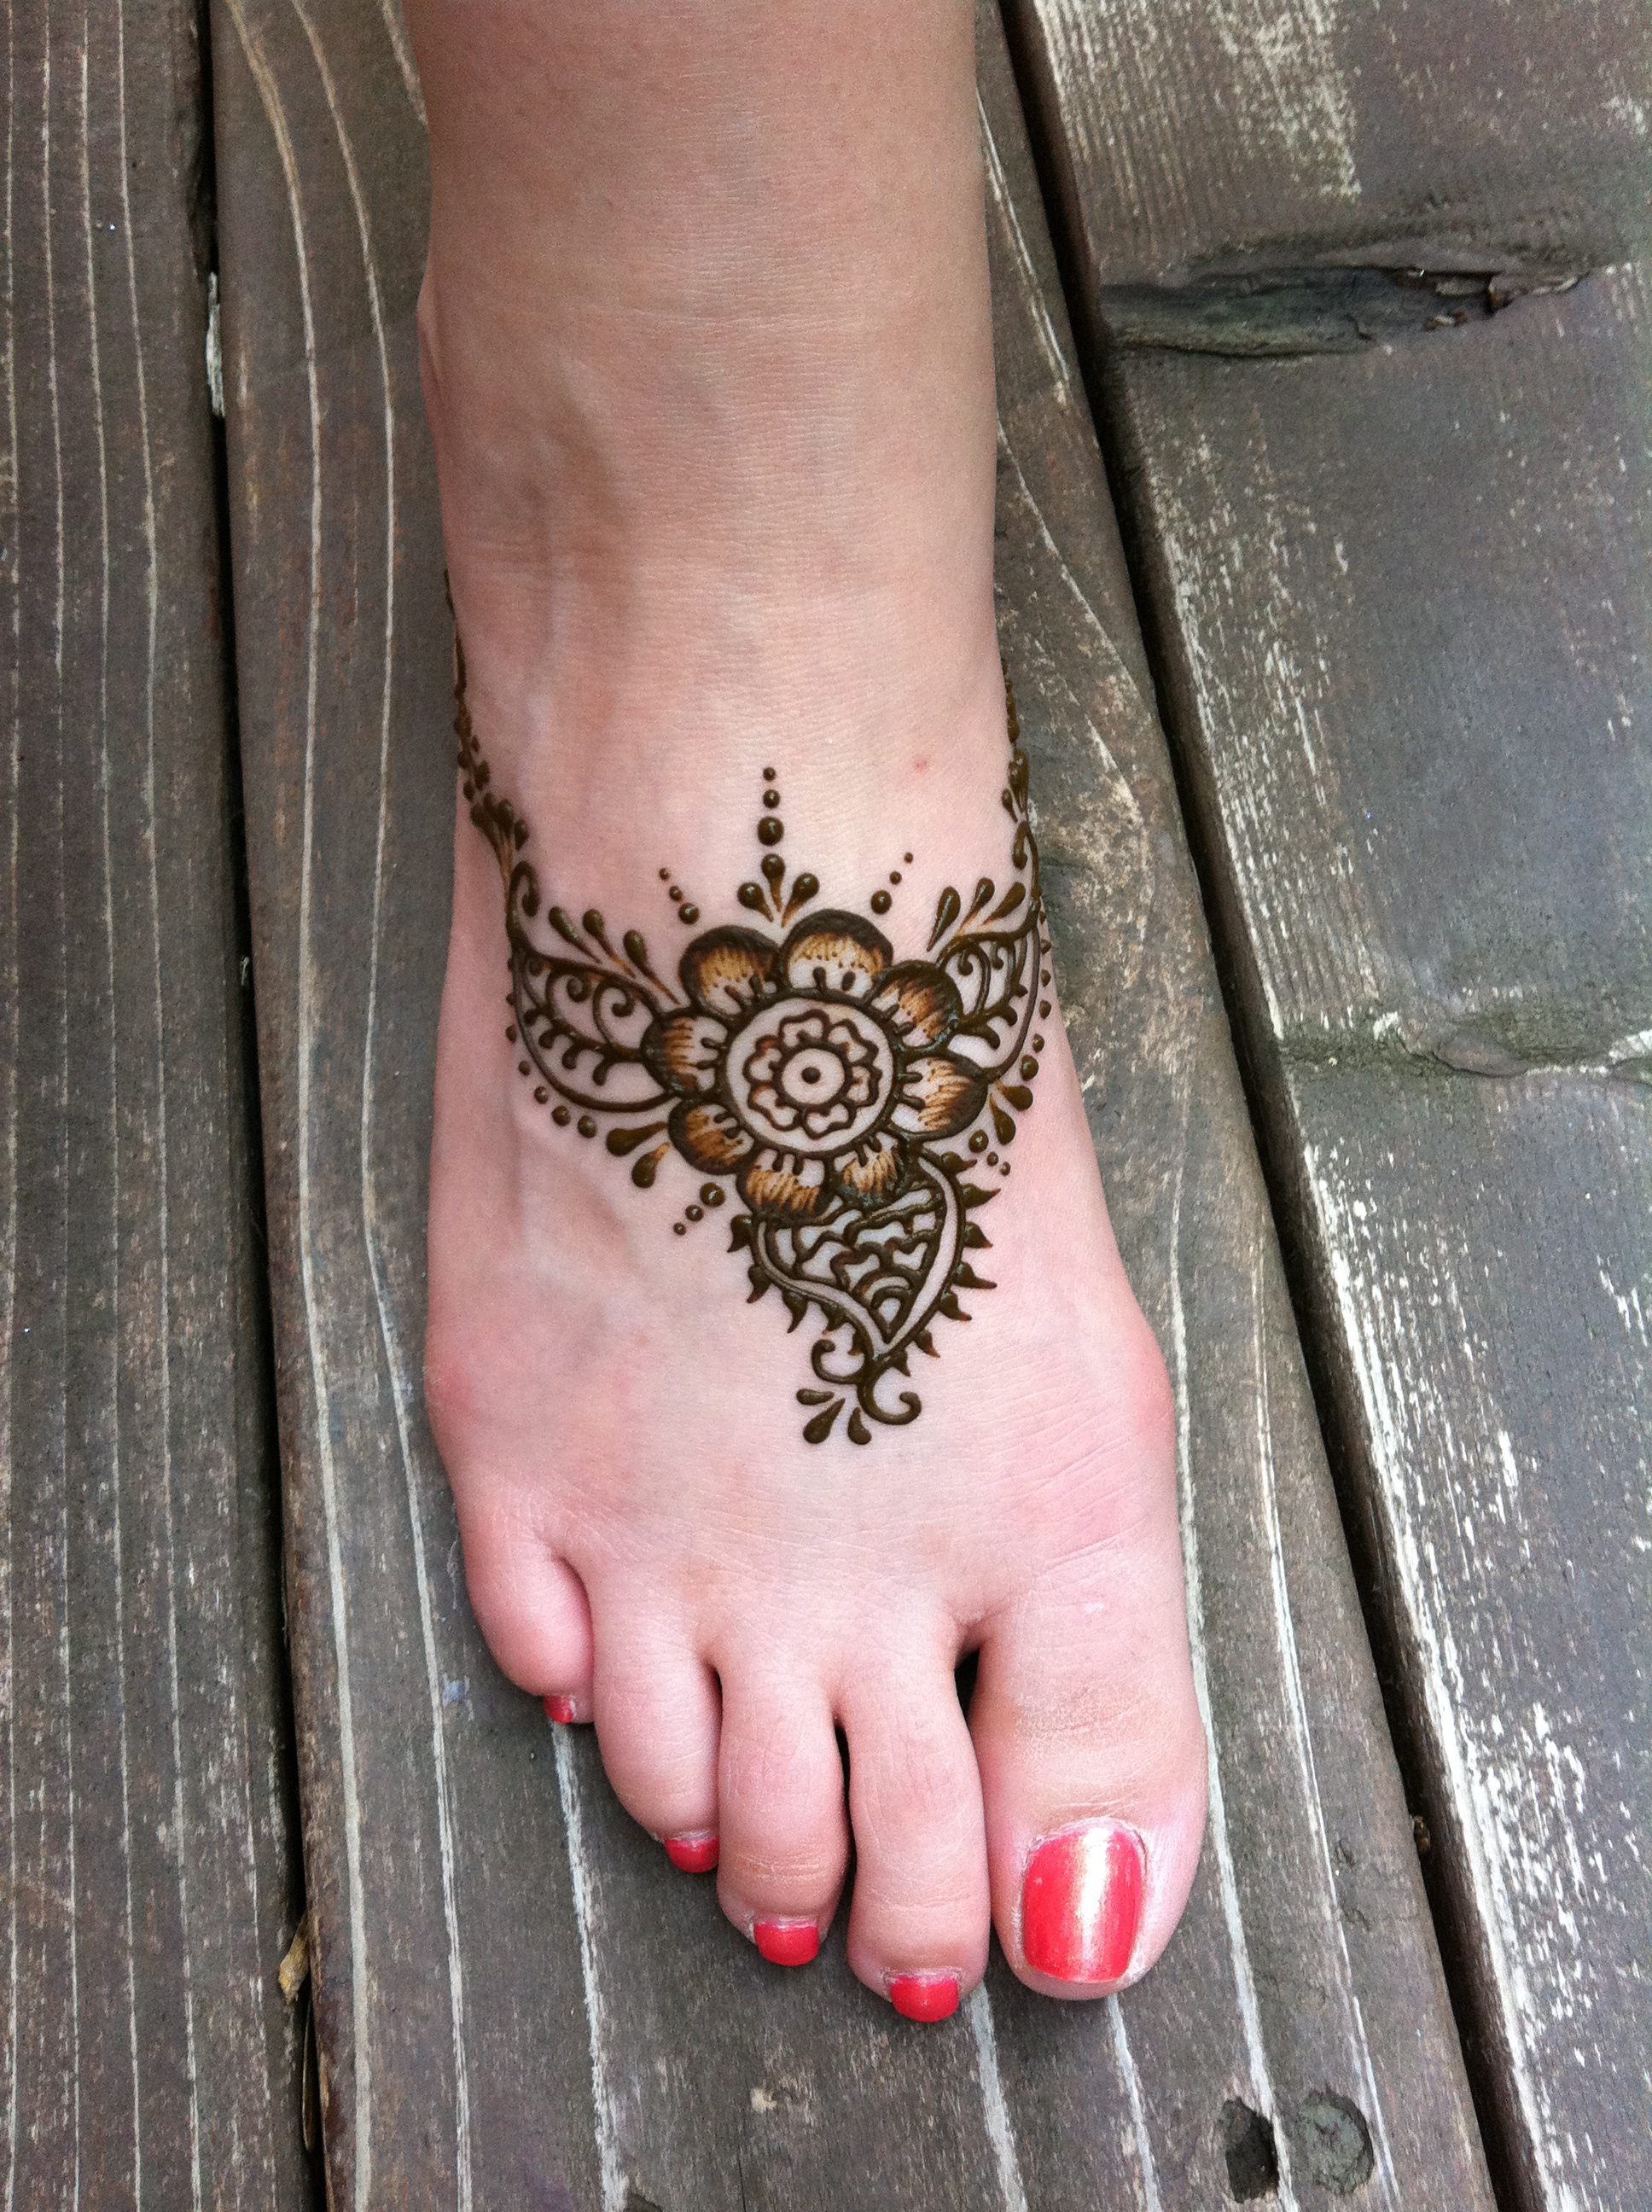 Henna Tattoos - Chicago Area Face Painting, Henna, Airbrush Tattoos ...